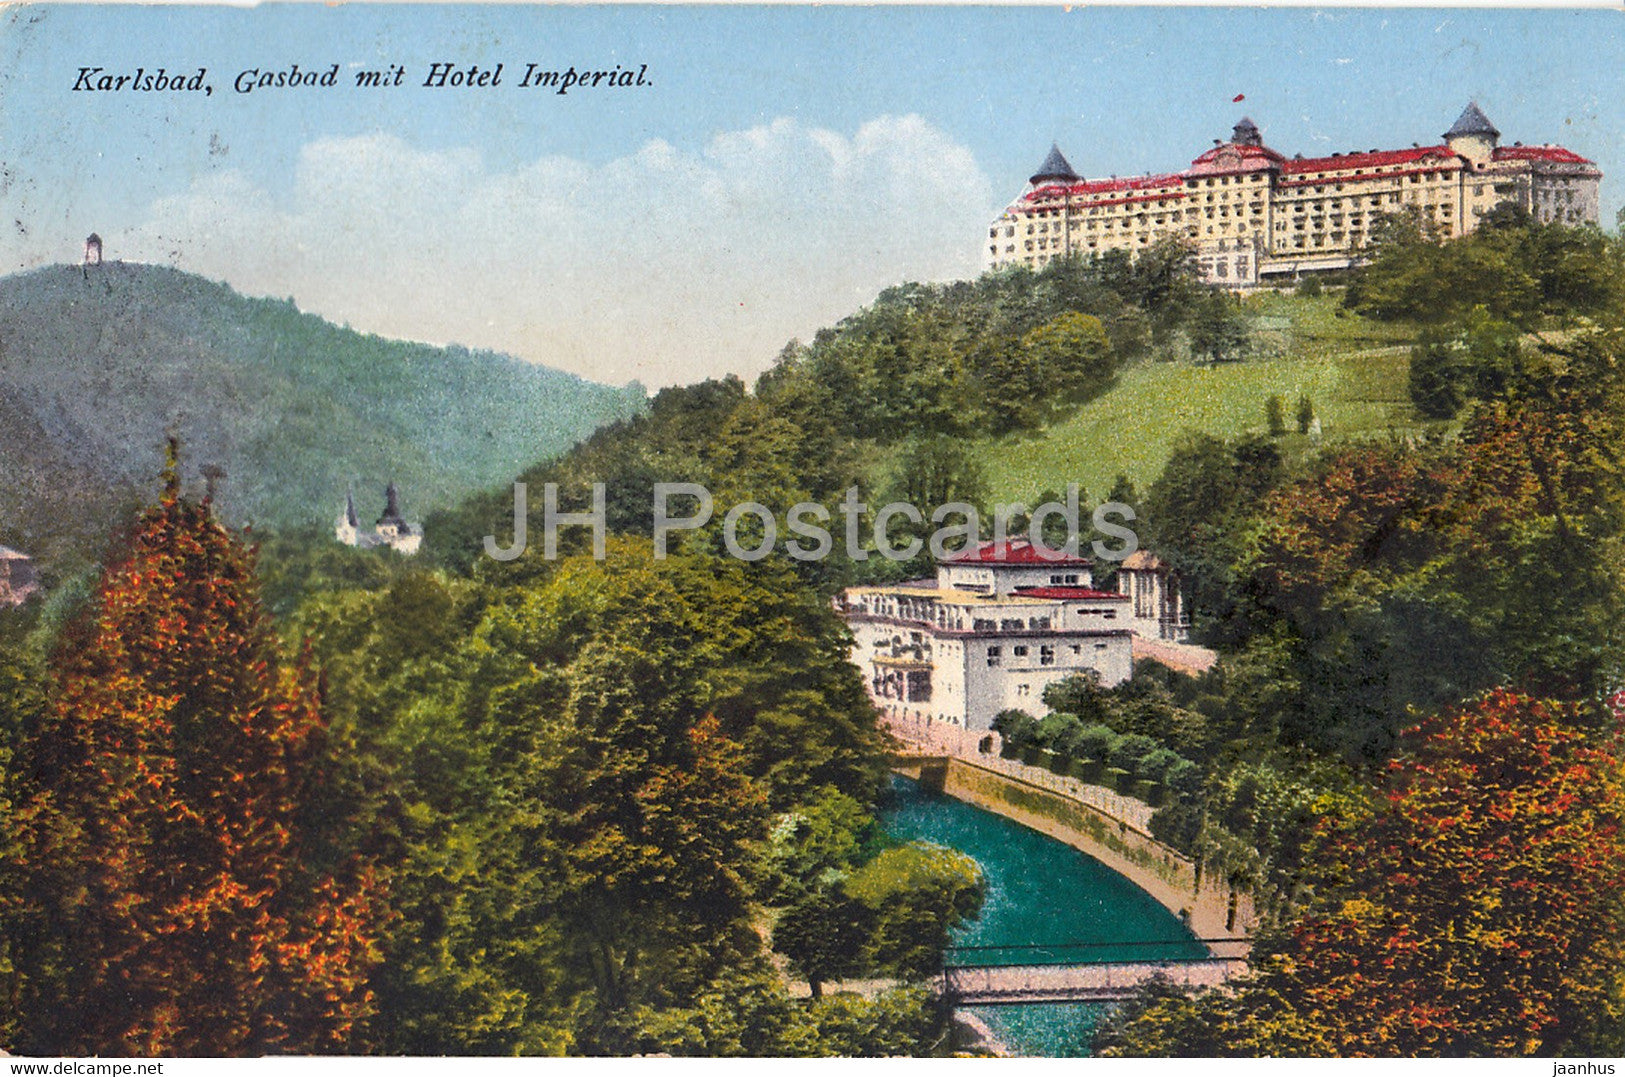 Karlovy Vary - Karlsbad - Gasbad - mit Hotel Imperial - 1016 - old postcard - Czechoslovakia - Czech Republic - used - JH Postcards